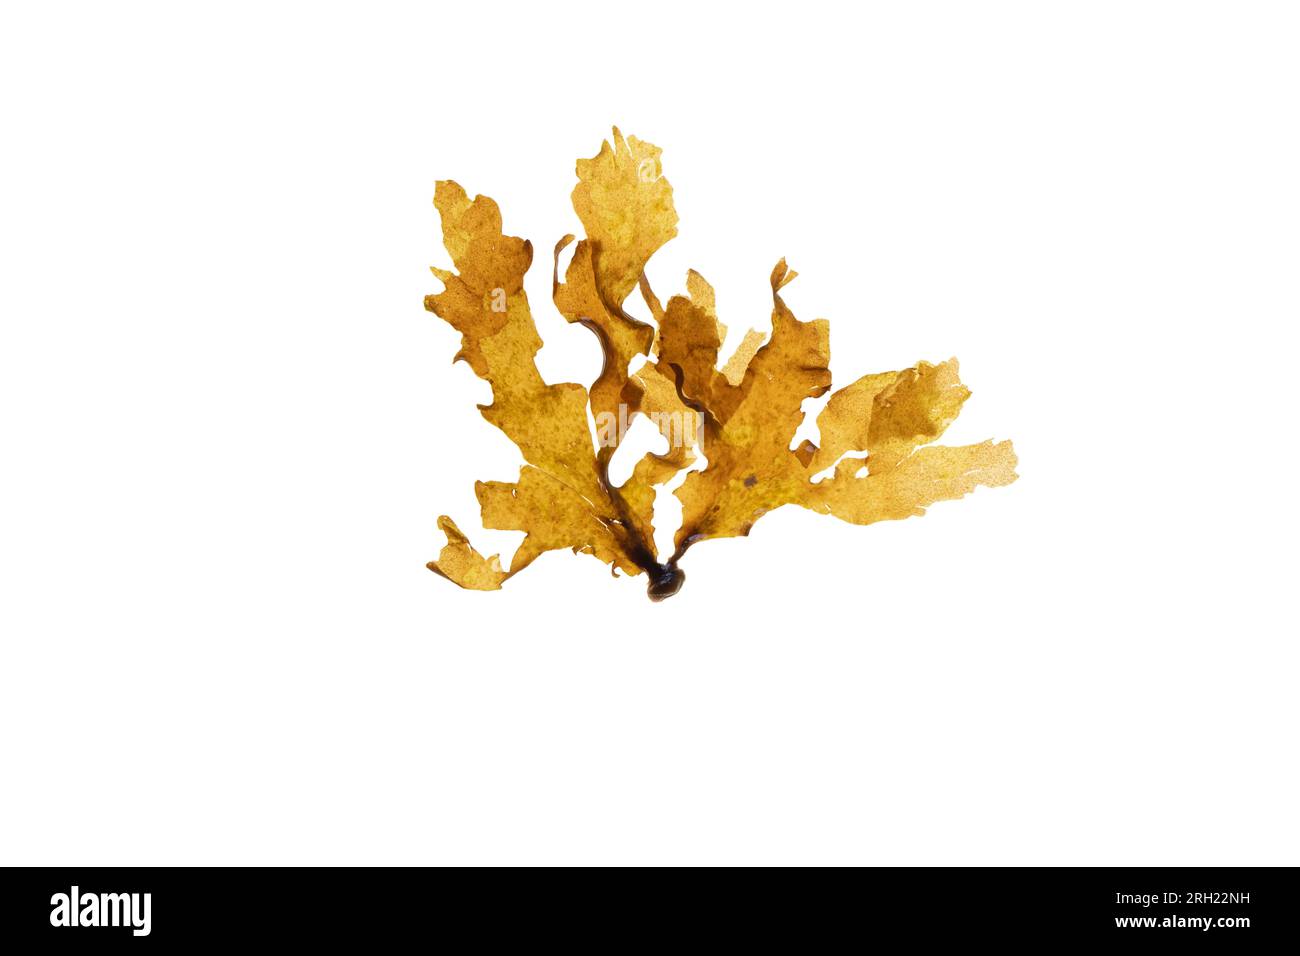 Spatoglossum solieri brown algae isolated on white. Foliaceous seaweed. Stock Photo